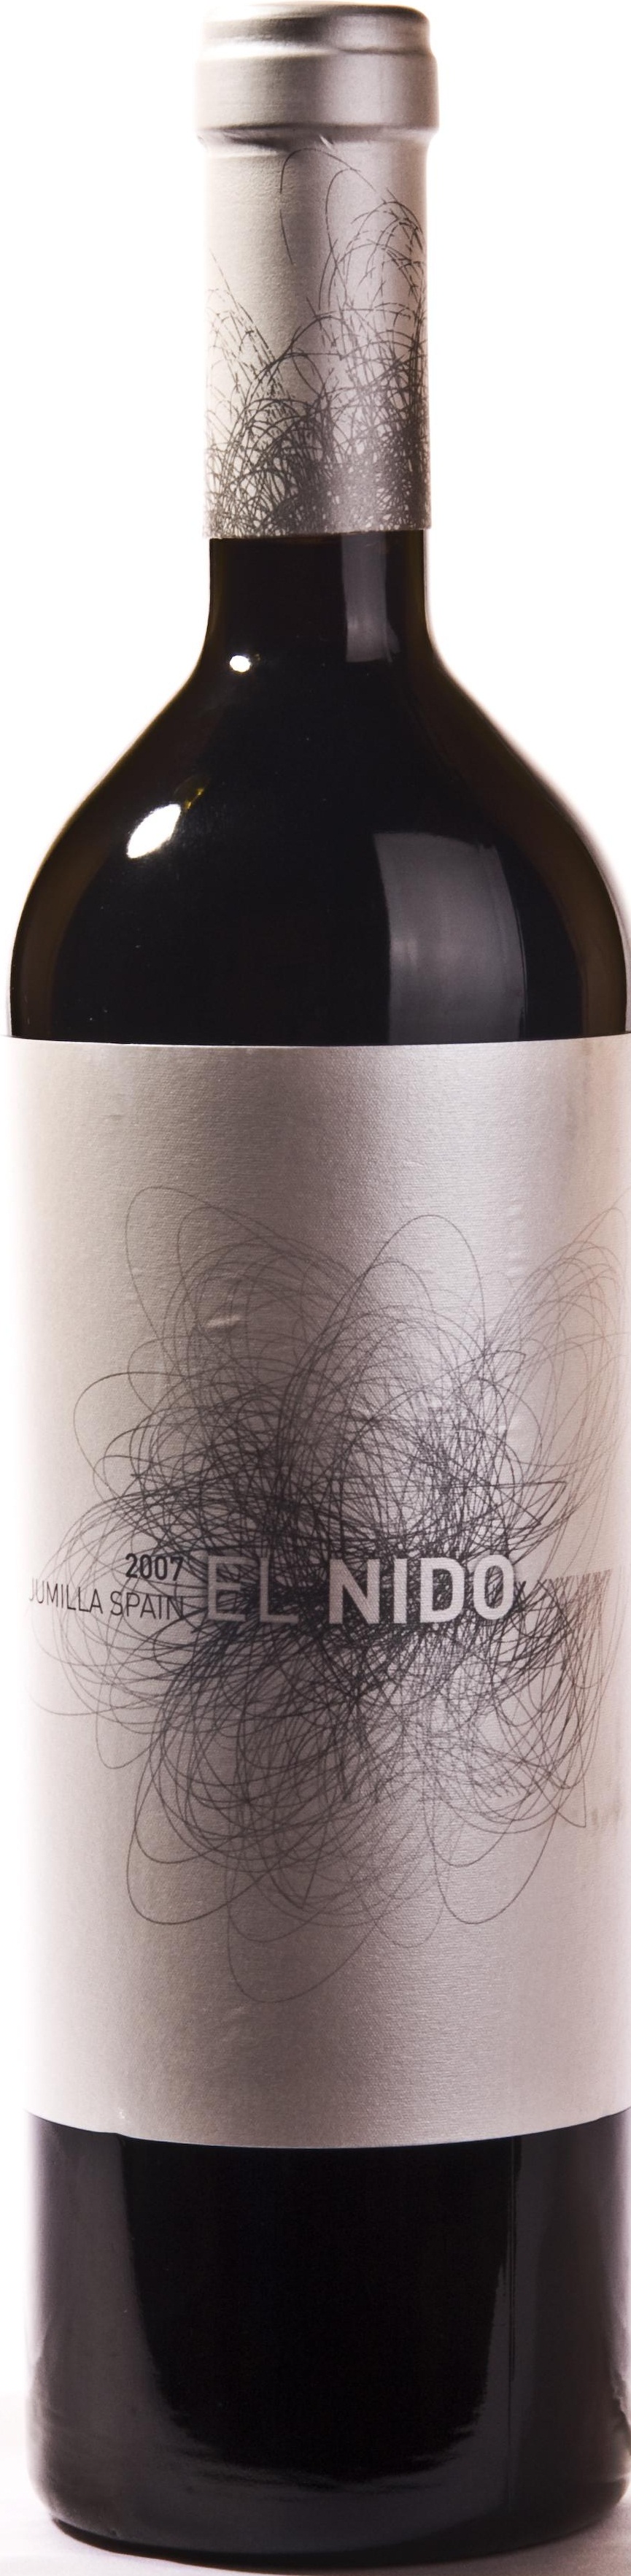 Image of Wine bottle El Nido